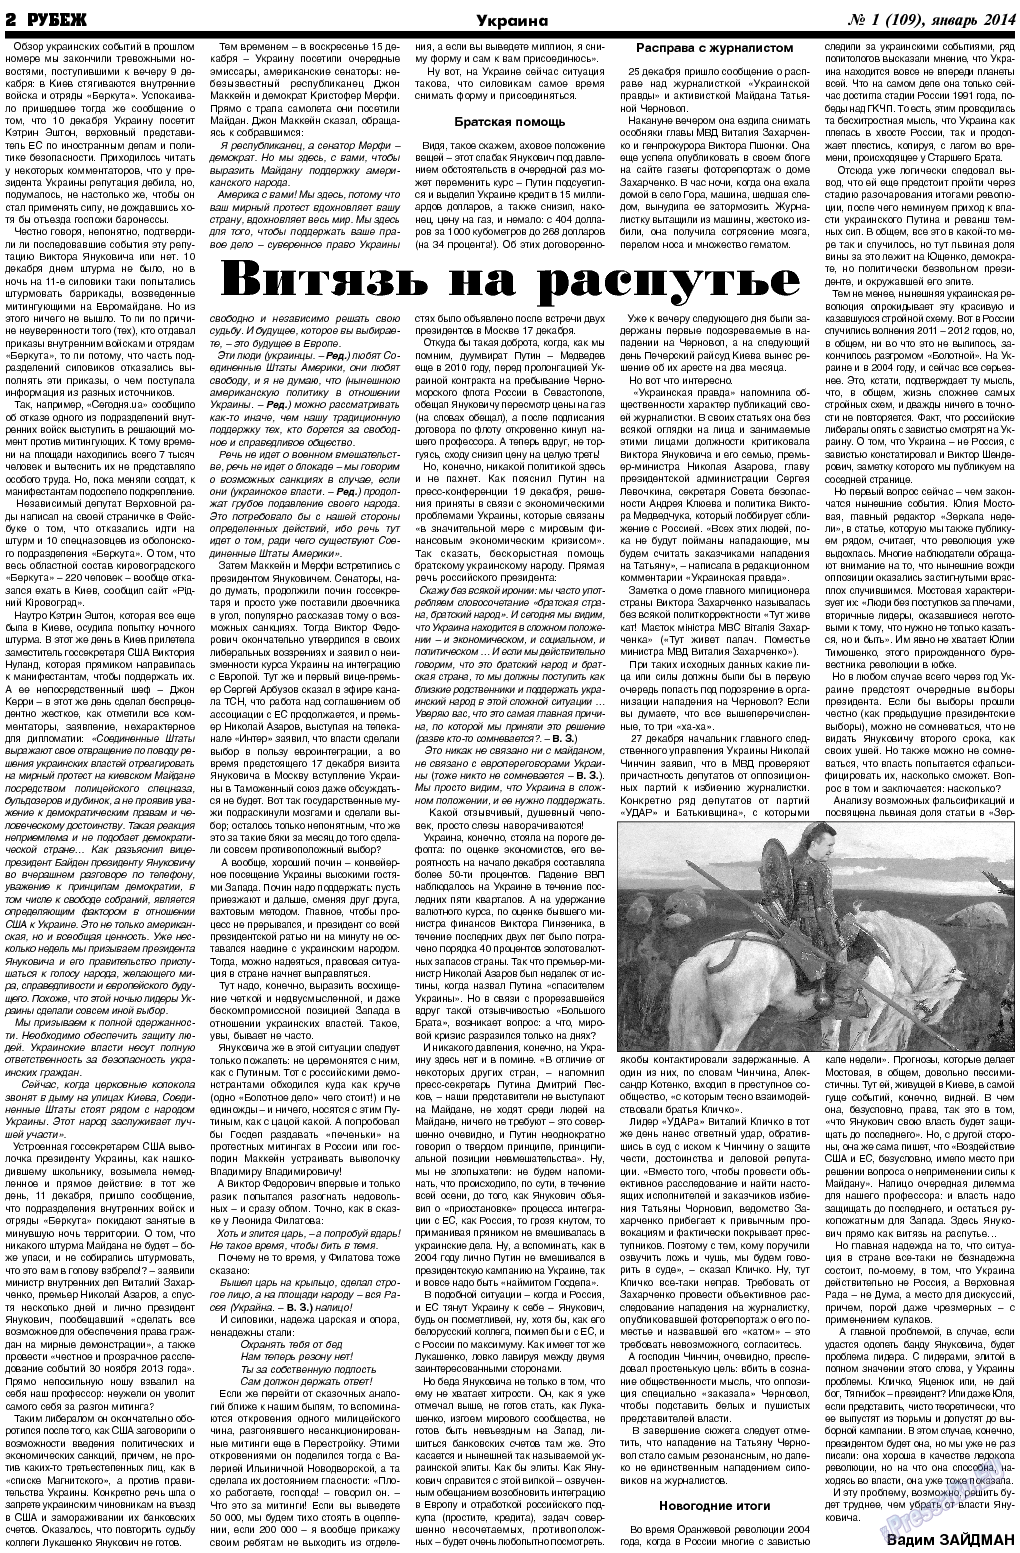 Рубеж, газета. 2014 №1 стр.2